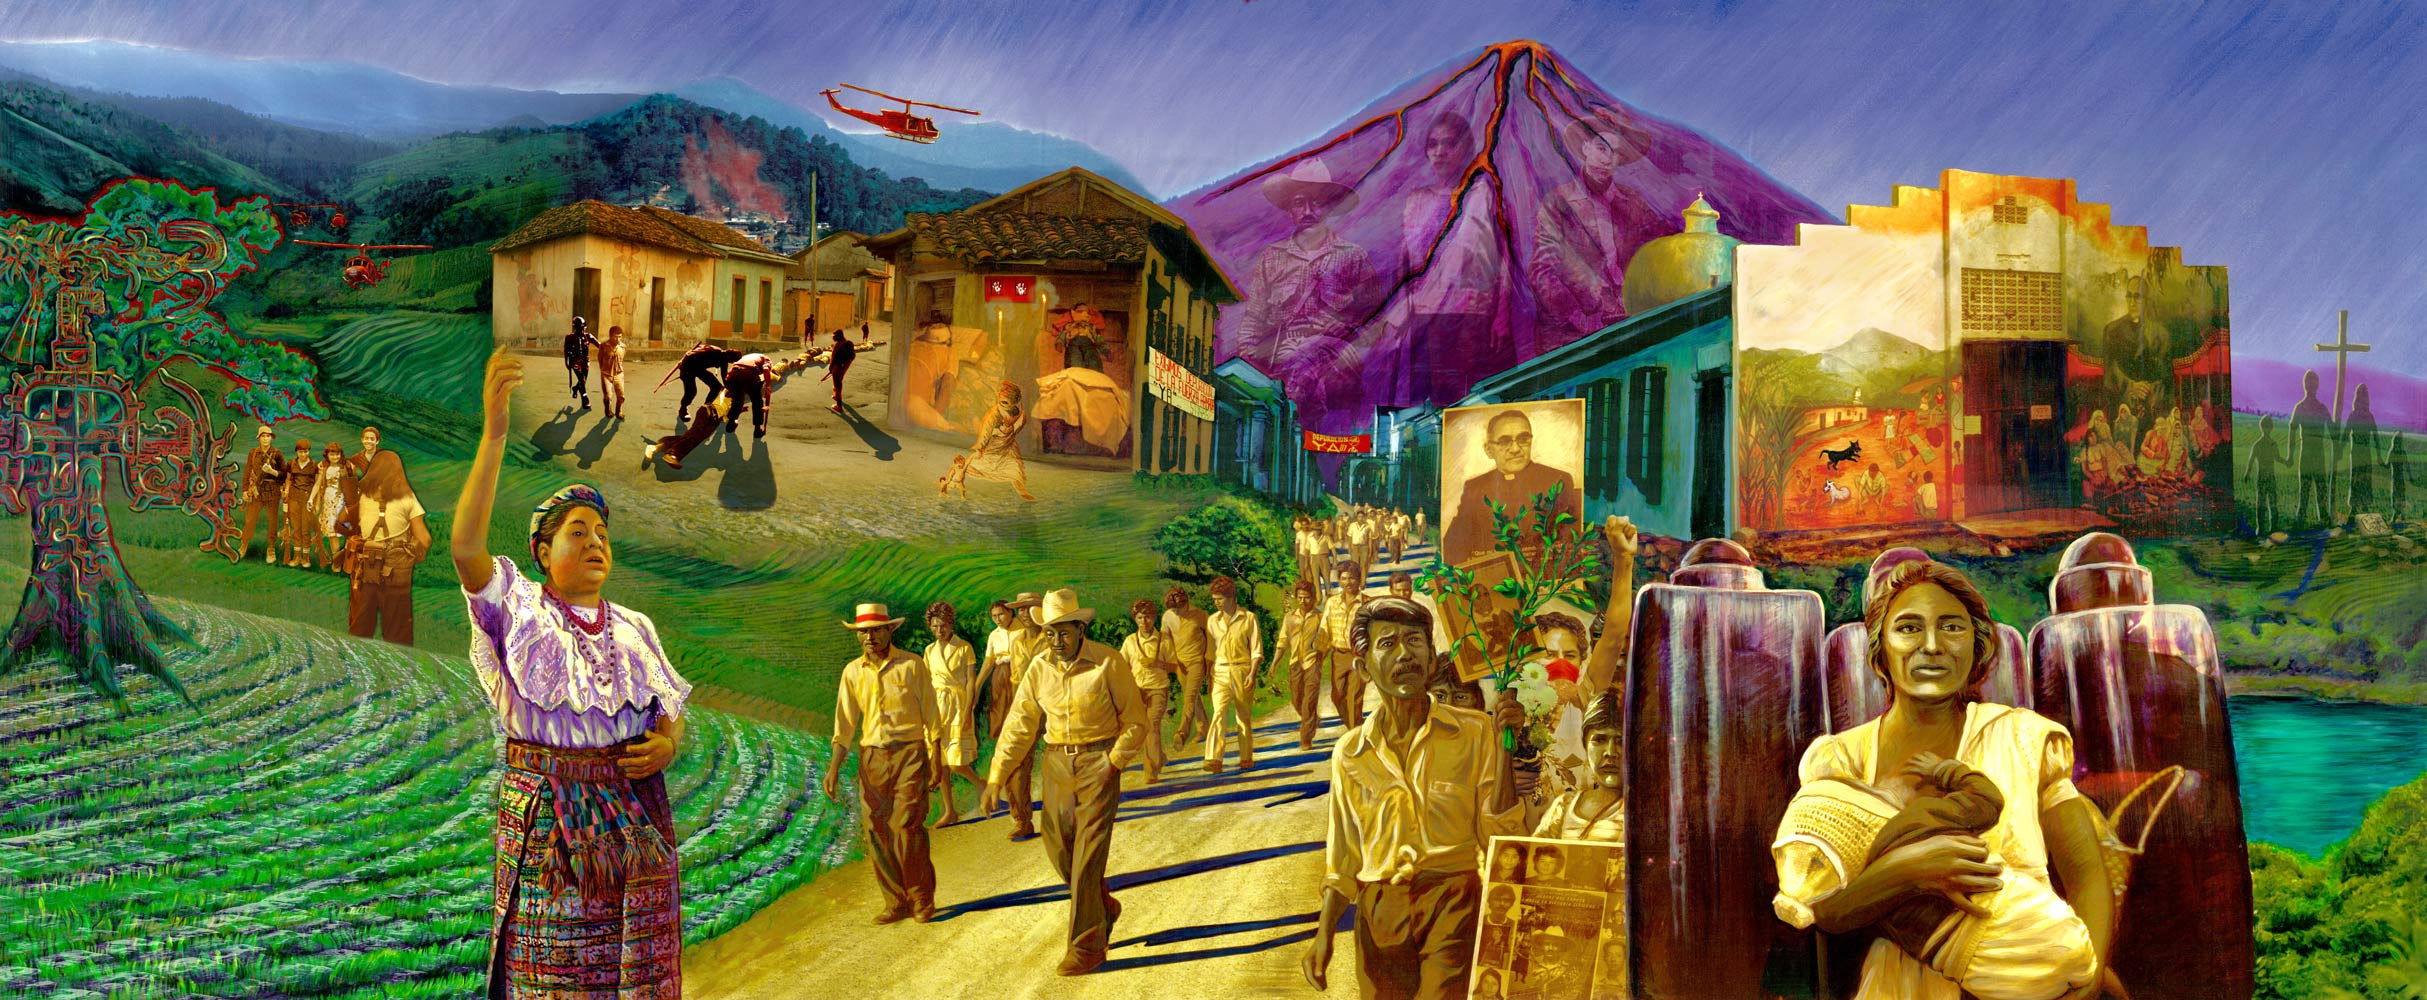 Migration of the Golden People, CARECEN Mural (2002)